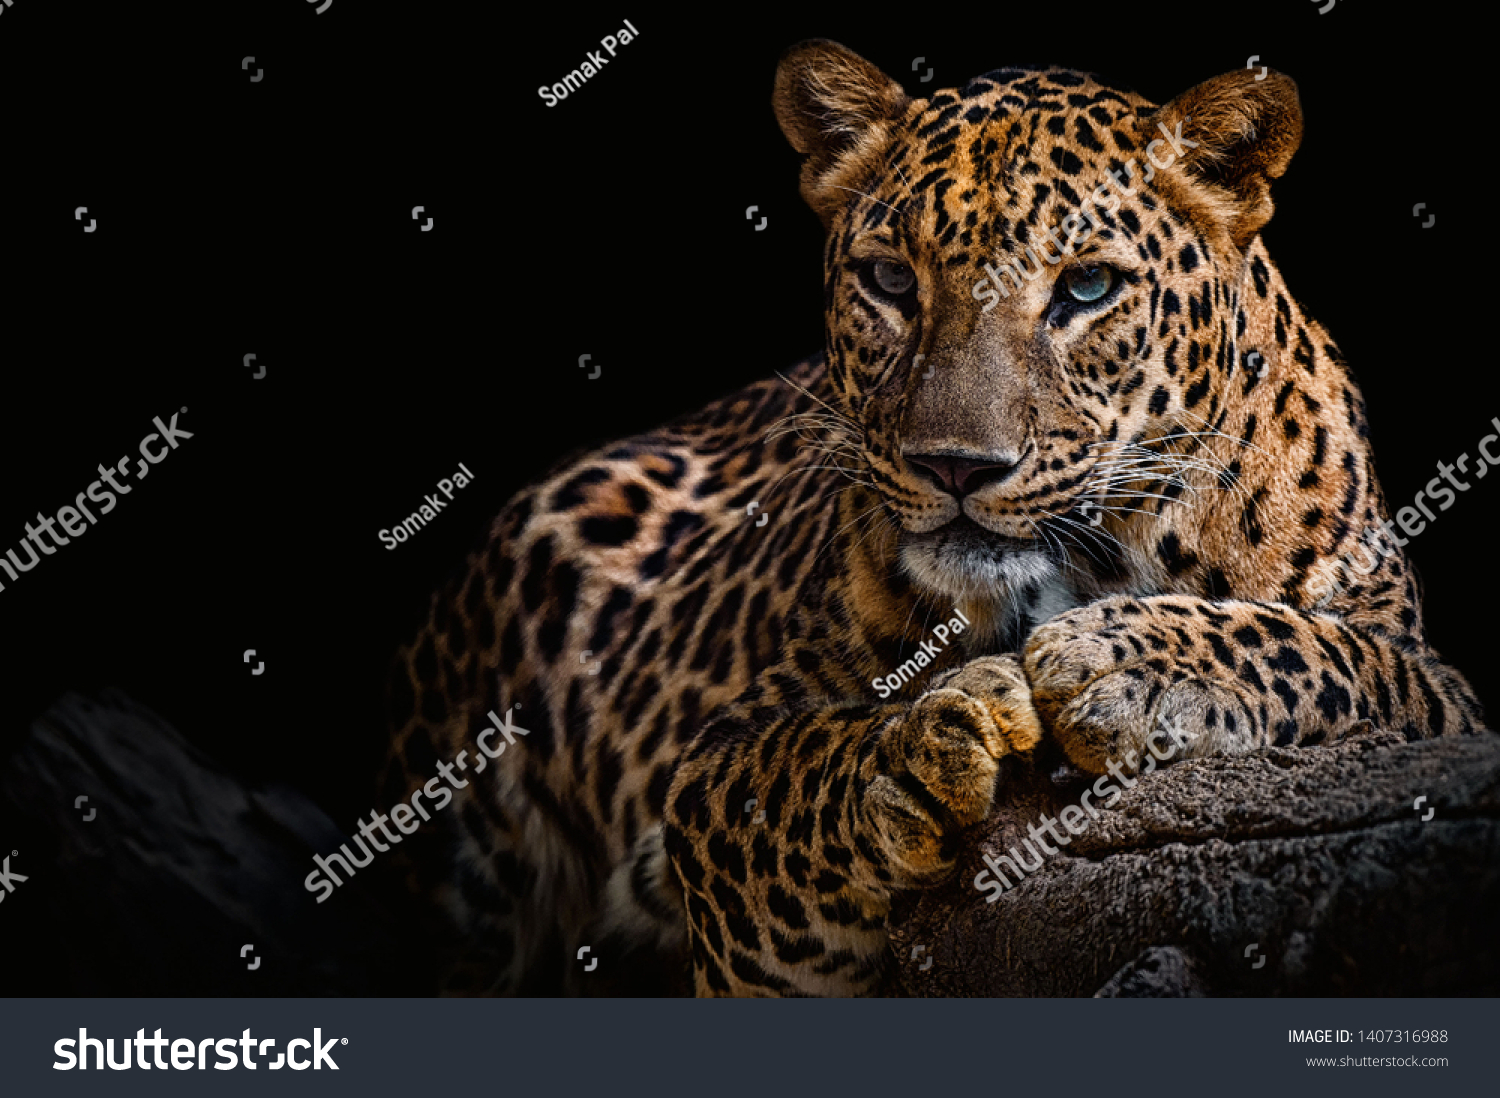 Leopard resting on a log against a black background #1407316988